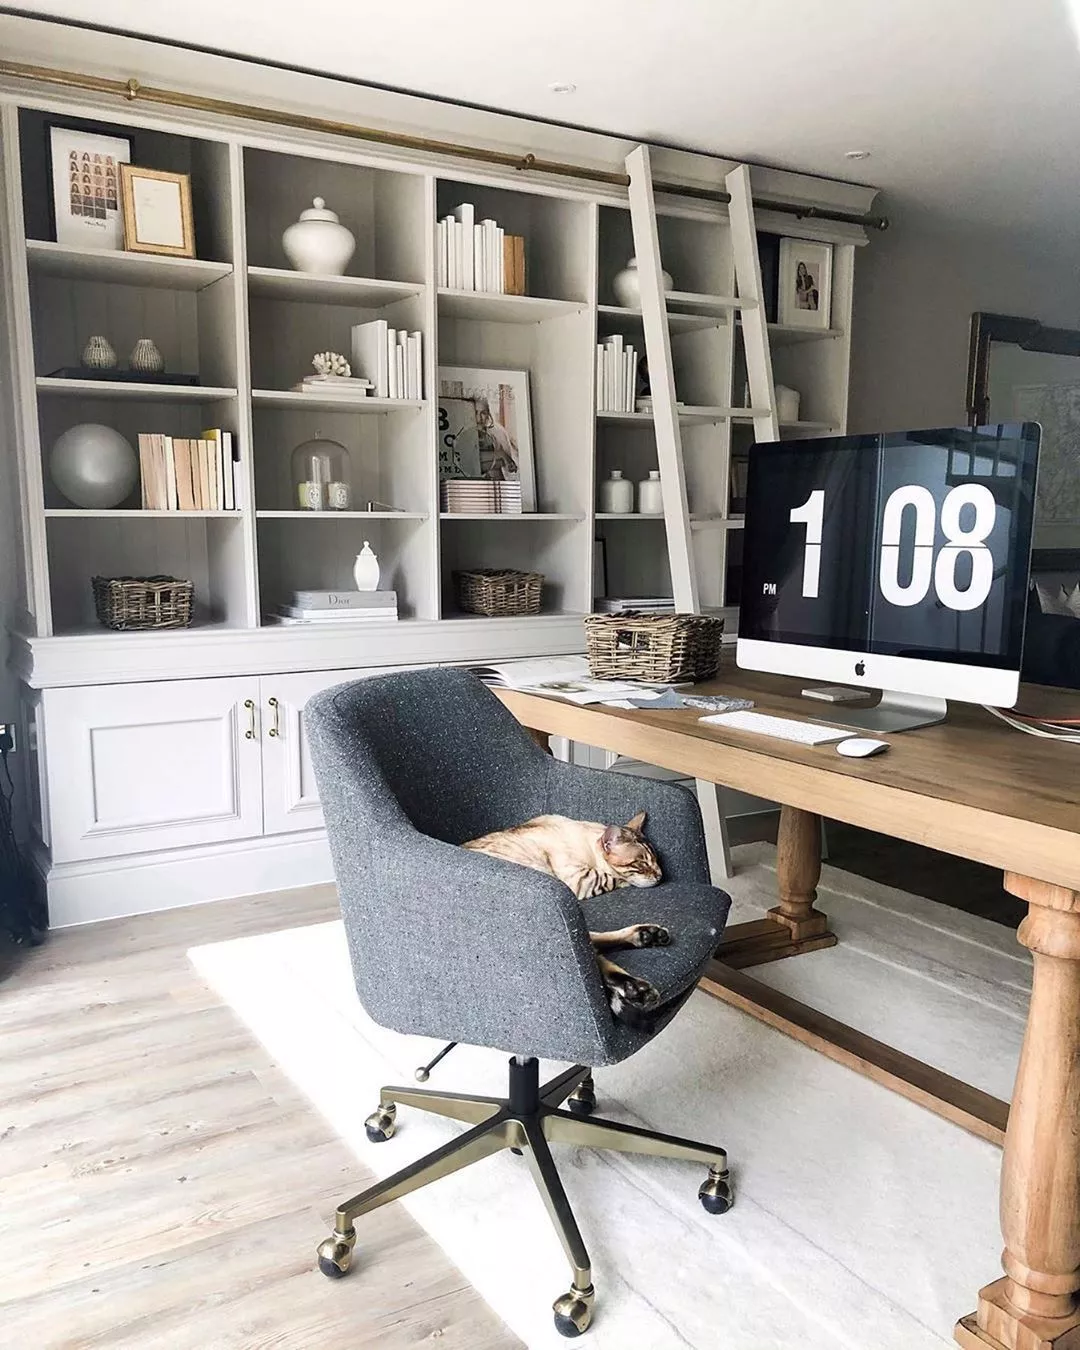 https://www.extraspace.com/blog/wp-content/uploads/2018/01/comfortable-design-dream-home-office.jpg.webp